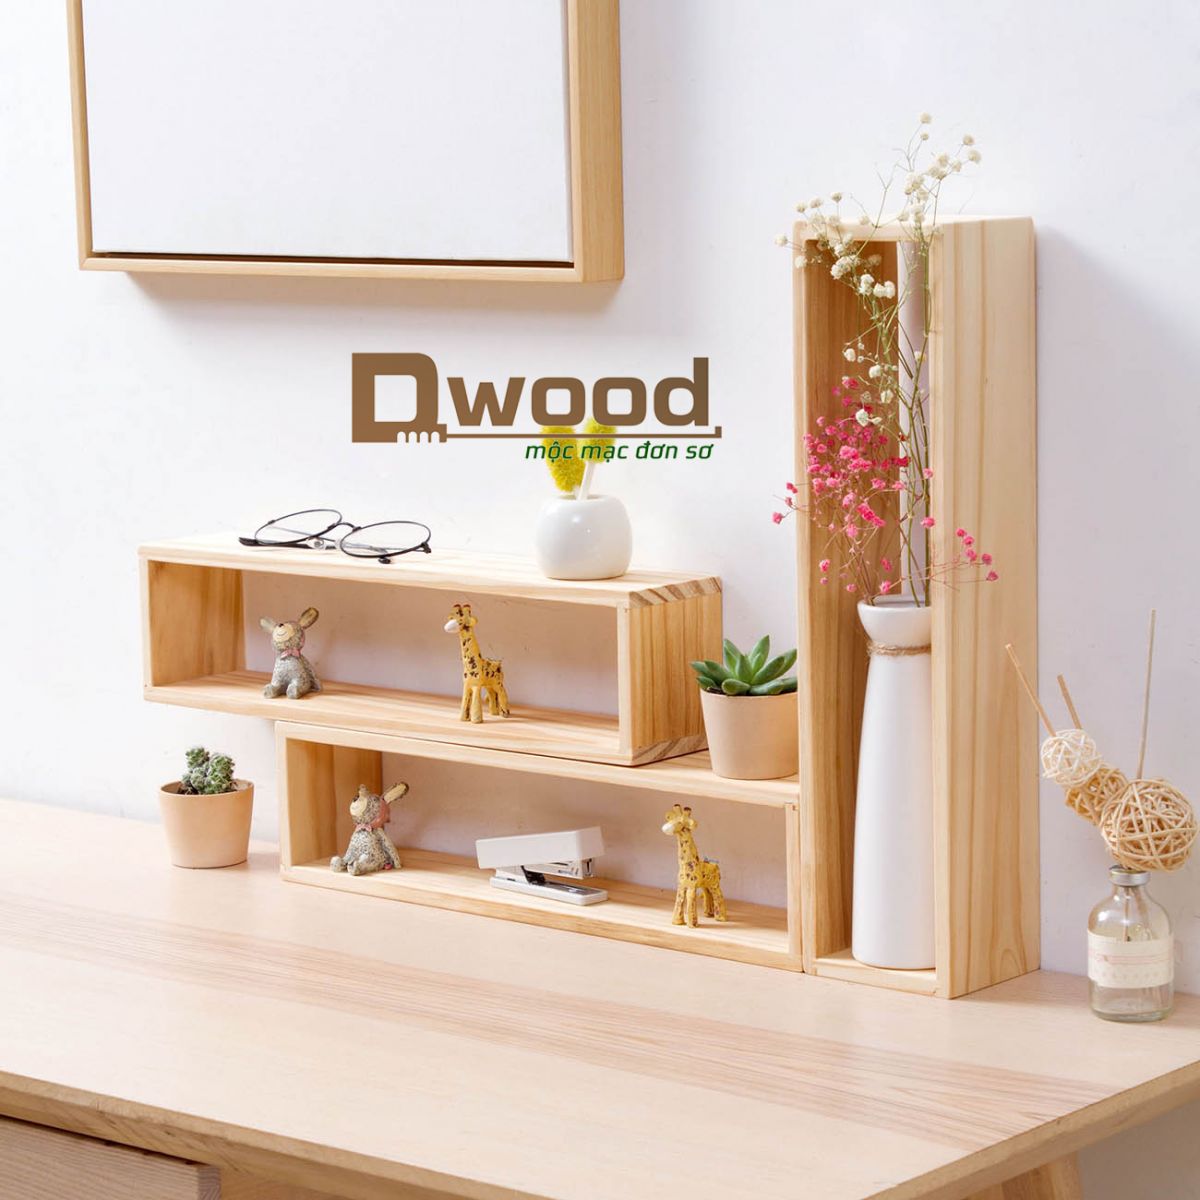 Wooden Desk Shelf DWOOD - 1 Shelf